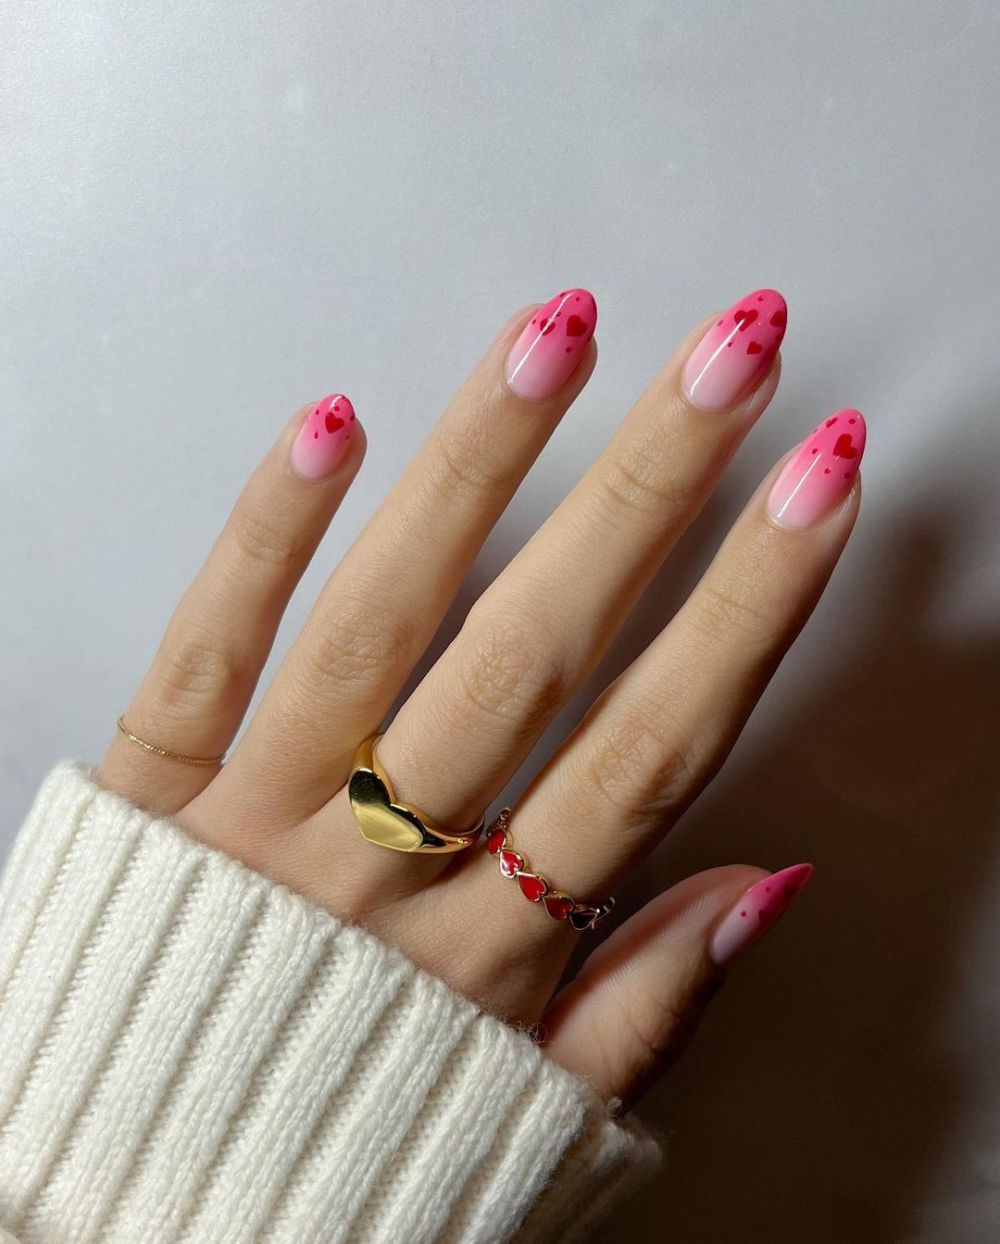 48 Inspirasi Desain Nail Art Tema Love yang Catchy tapi Simpel Lho